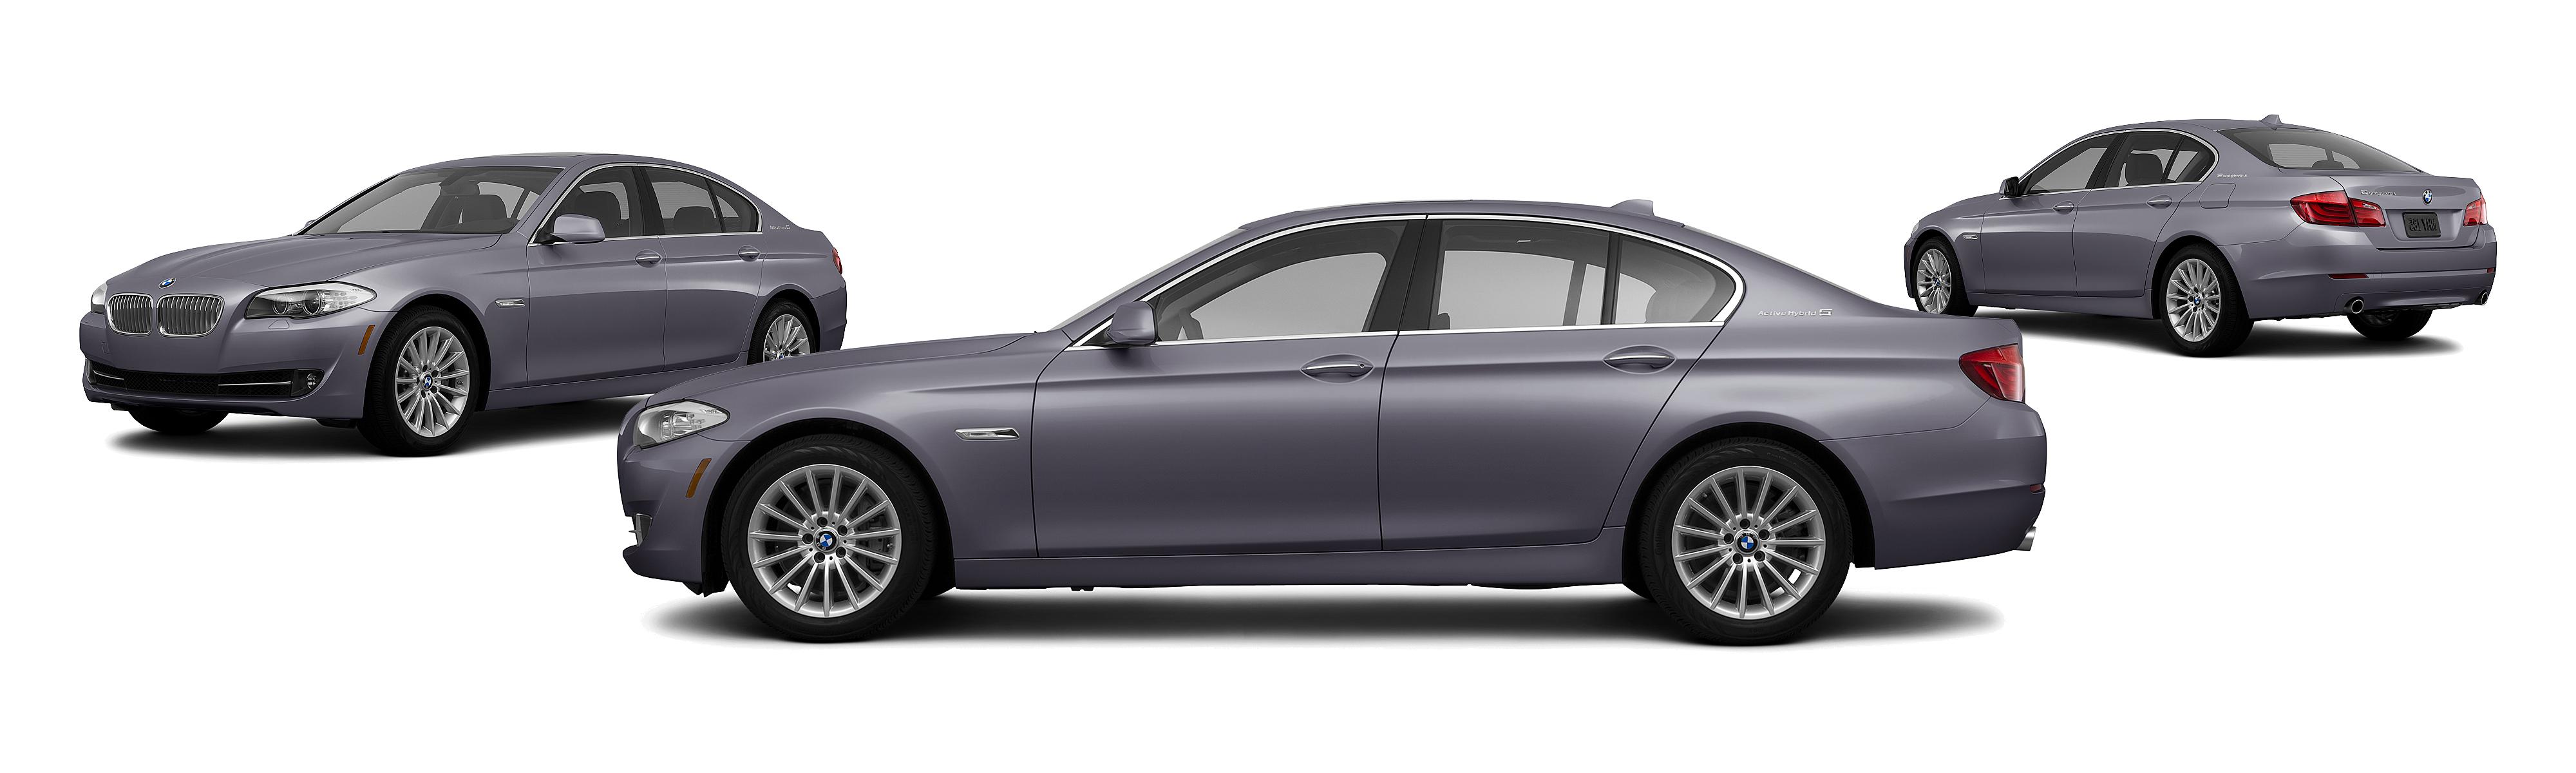 2013 BMW 5 Series ActiveHybrid 5 4dr Sedan - Research - GrooveCar